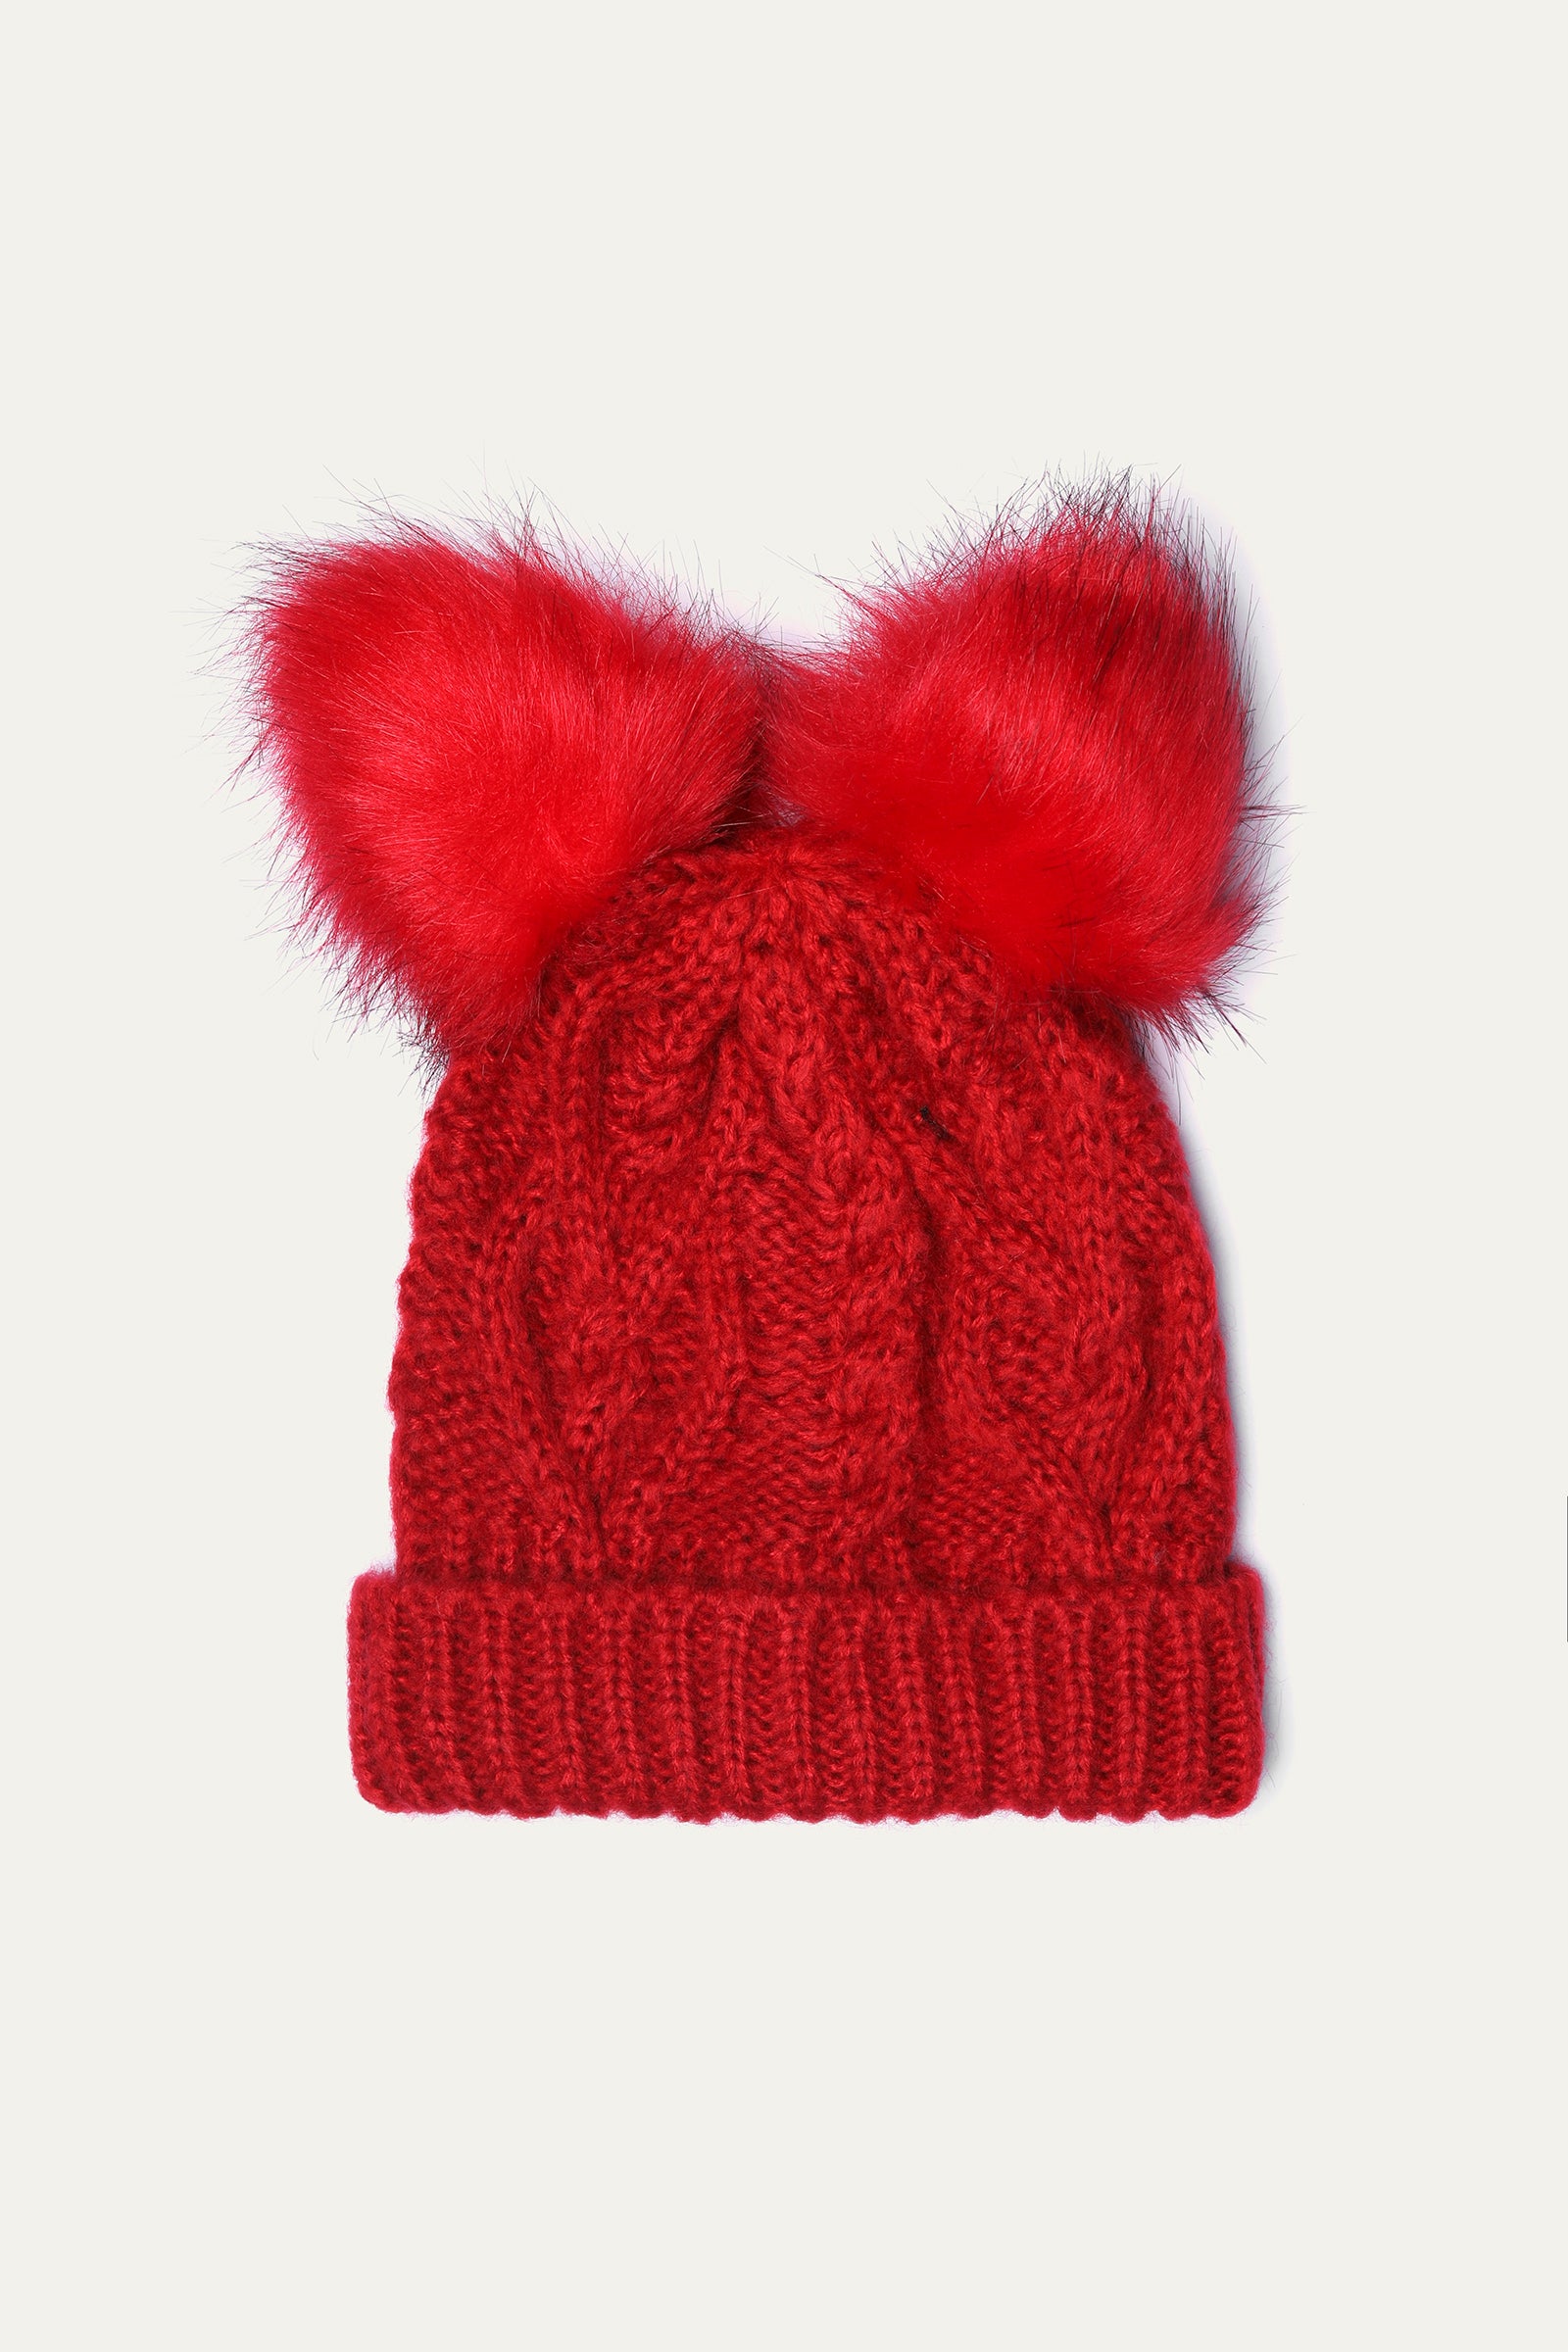 Woolen Cap - Soft Acrylic | Red - Best Kids Clothing Brands In Pakistan Online|Minnie Minors